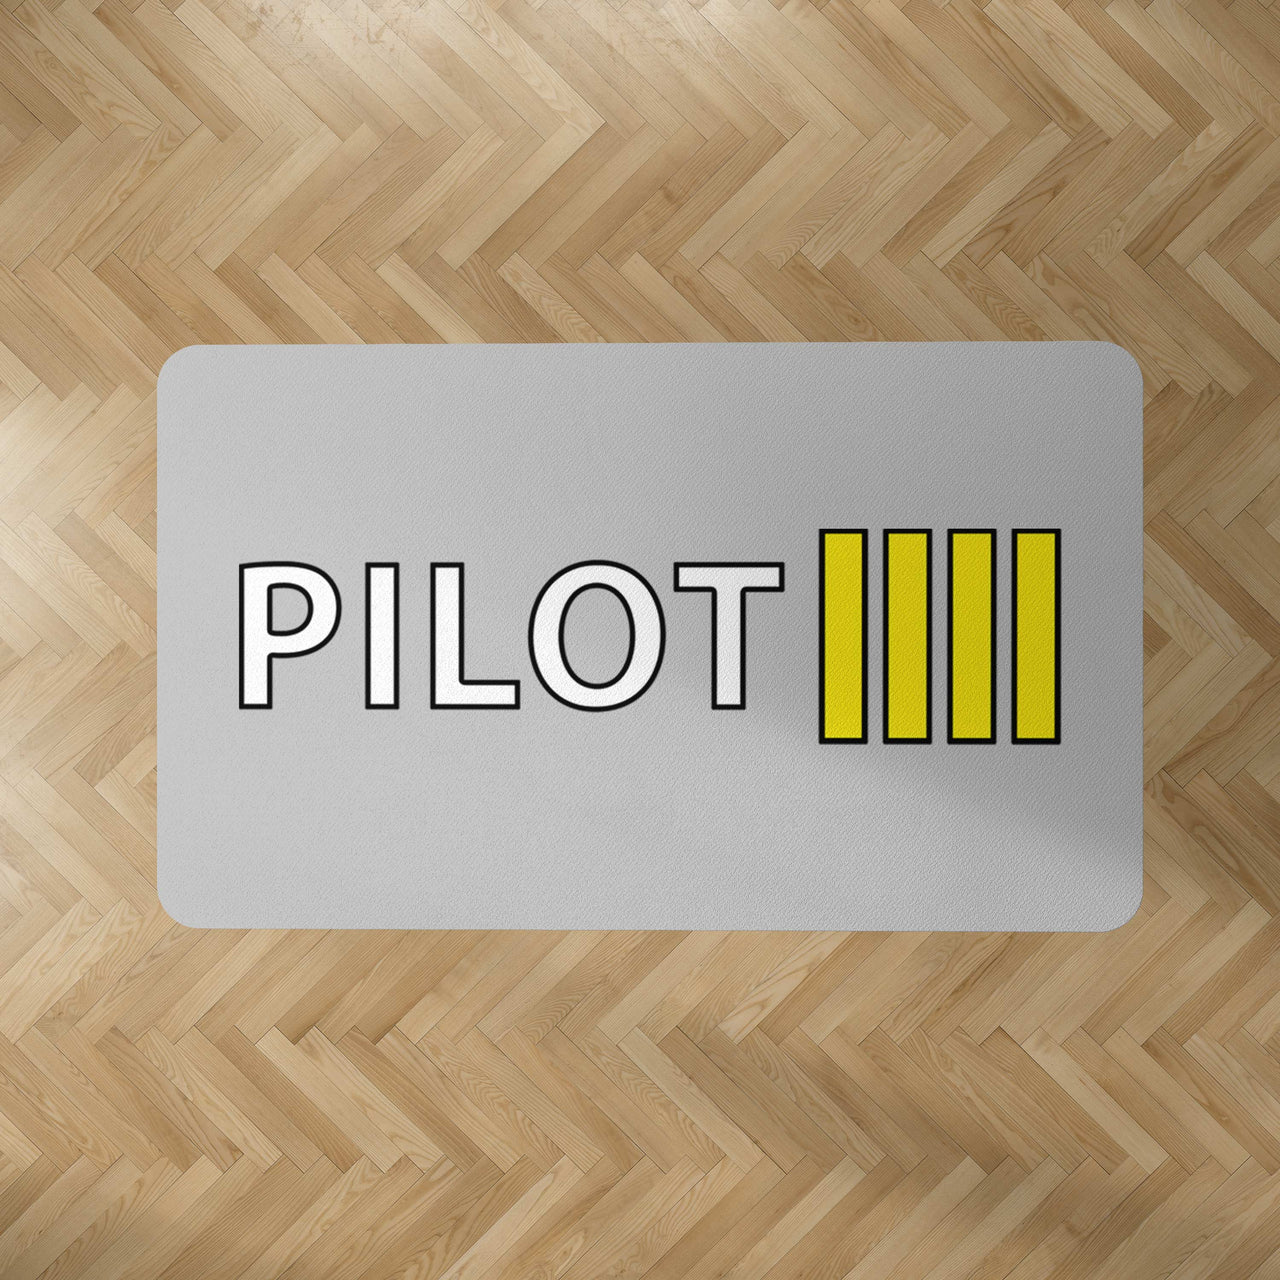 Pilot & Stripes (4 Lines) Designed Carpet & Floor Mats